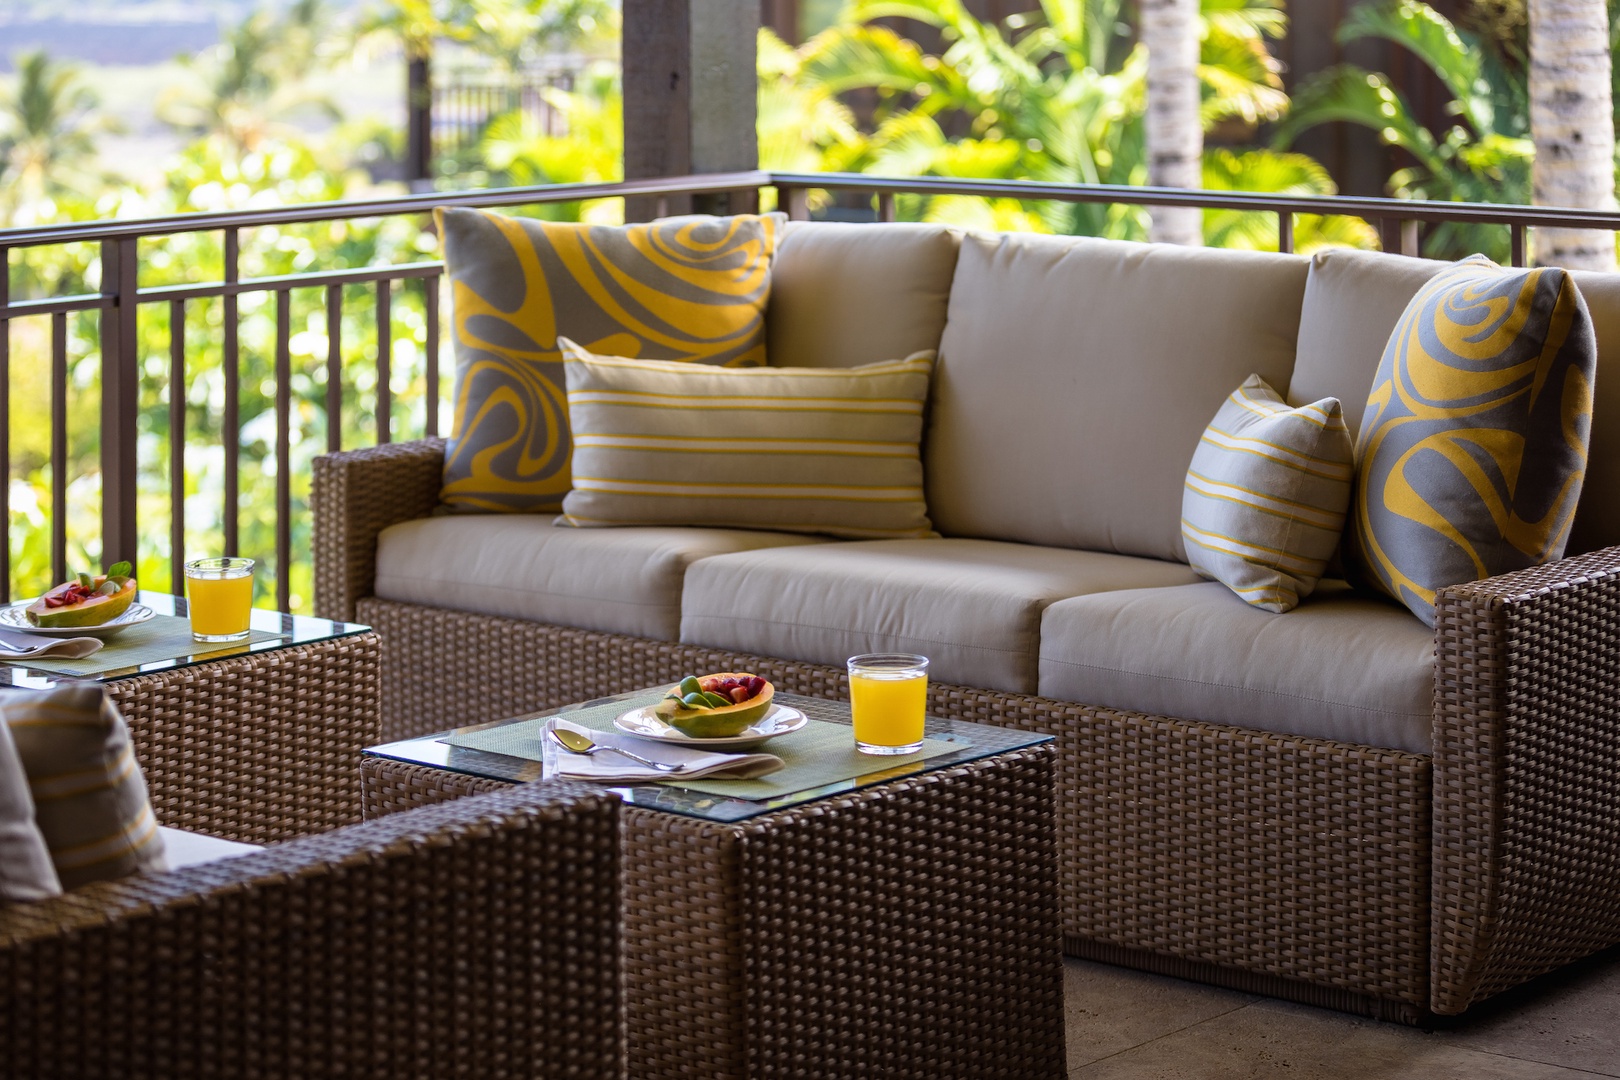 Kailua Kona Vacation Rentals, 3BD Hali'ipua Villa (108) at Four Seasons Resort at Hualalai - Detail of lanai seating. Professional luxury design inside and out.